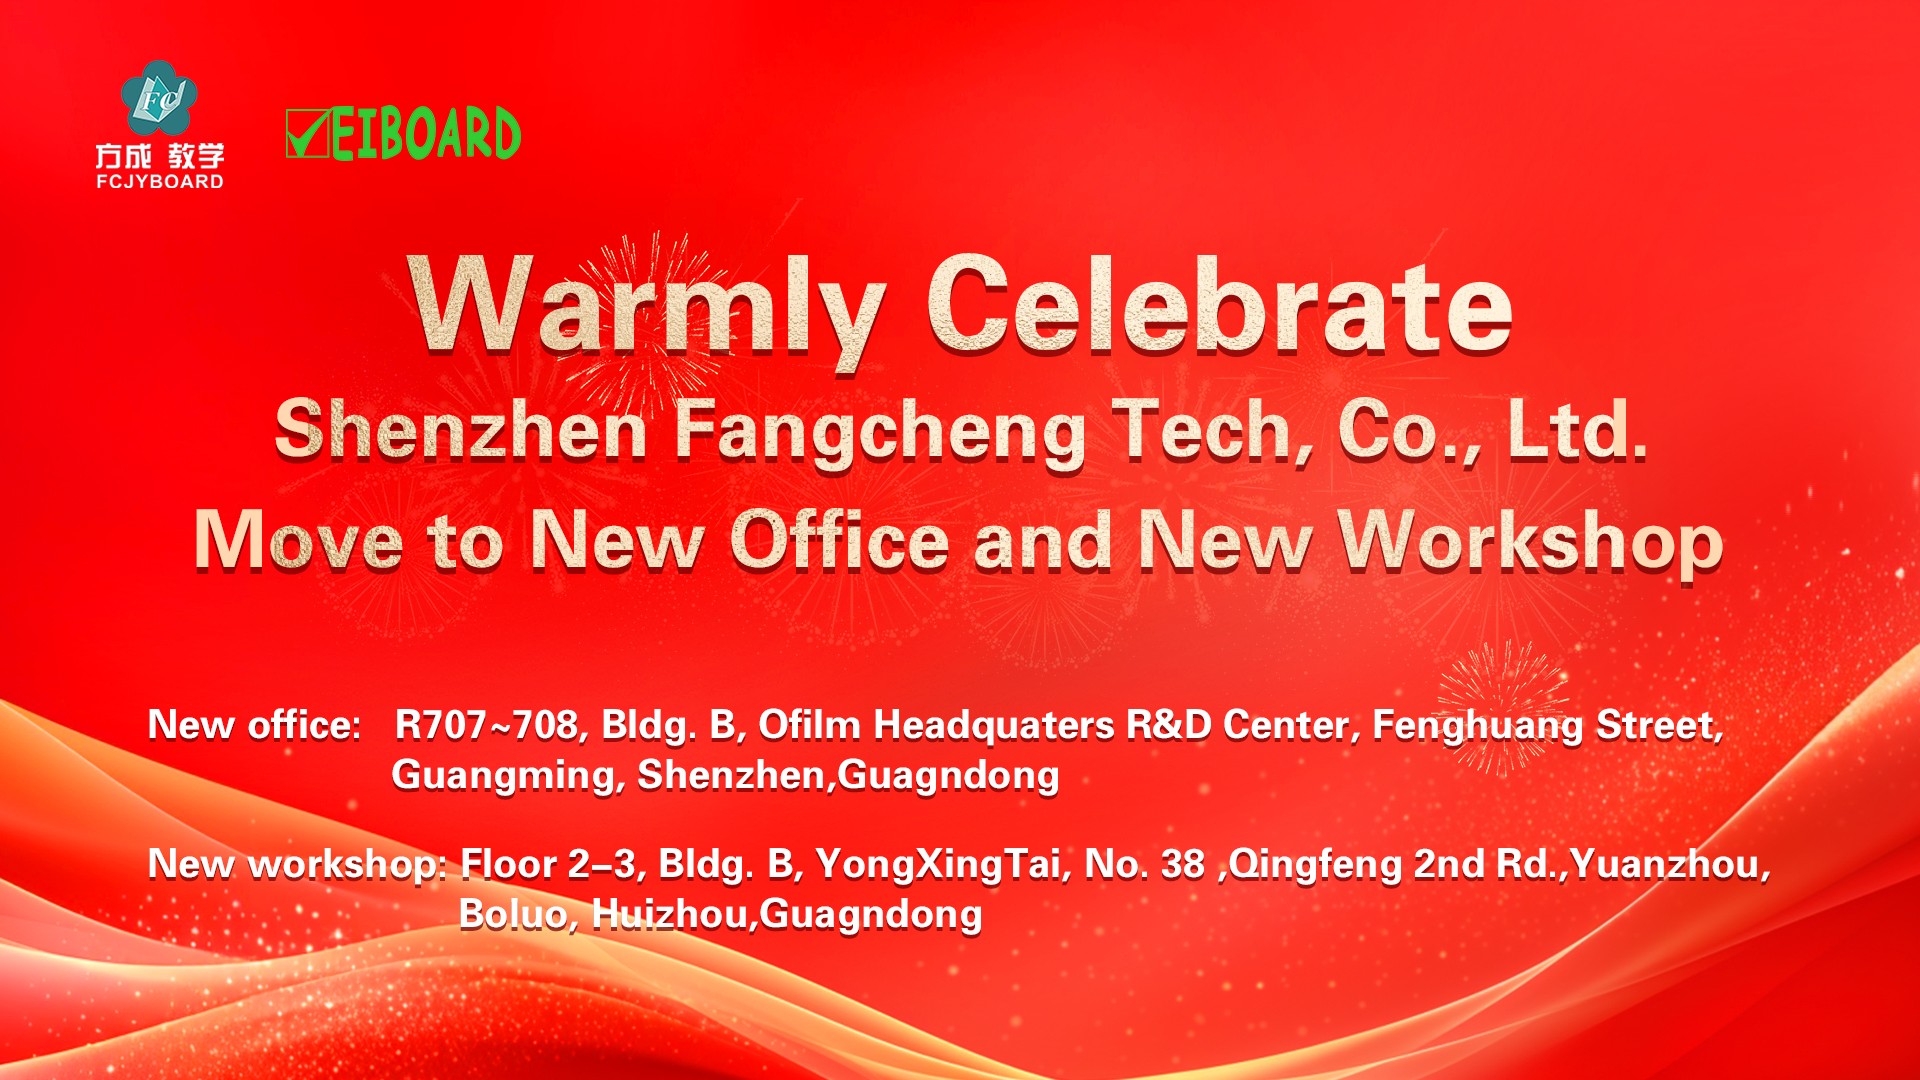 Sherehekea Shenzhen Fangcheng Tech Co., Ltd. Hamishia Ofisi Mpya na Warsha Mpya!